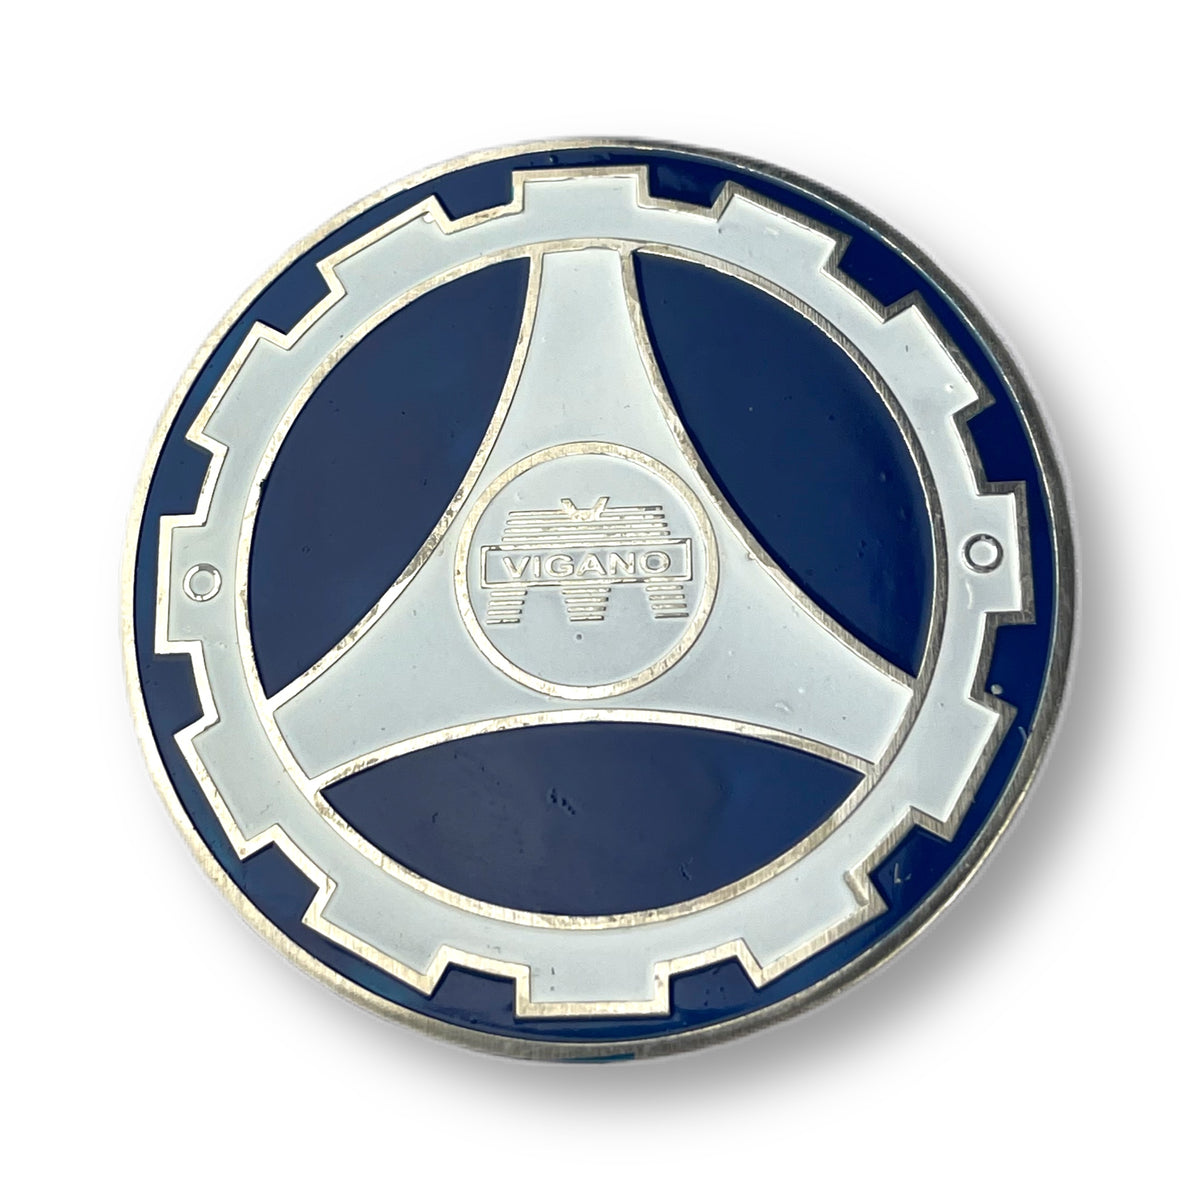 Lambretta Vigano Round Badge 52mm - Dark Blue